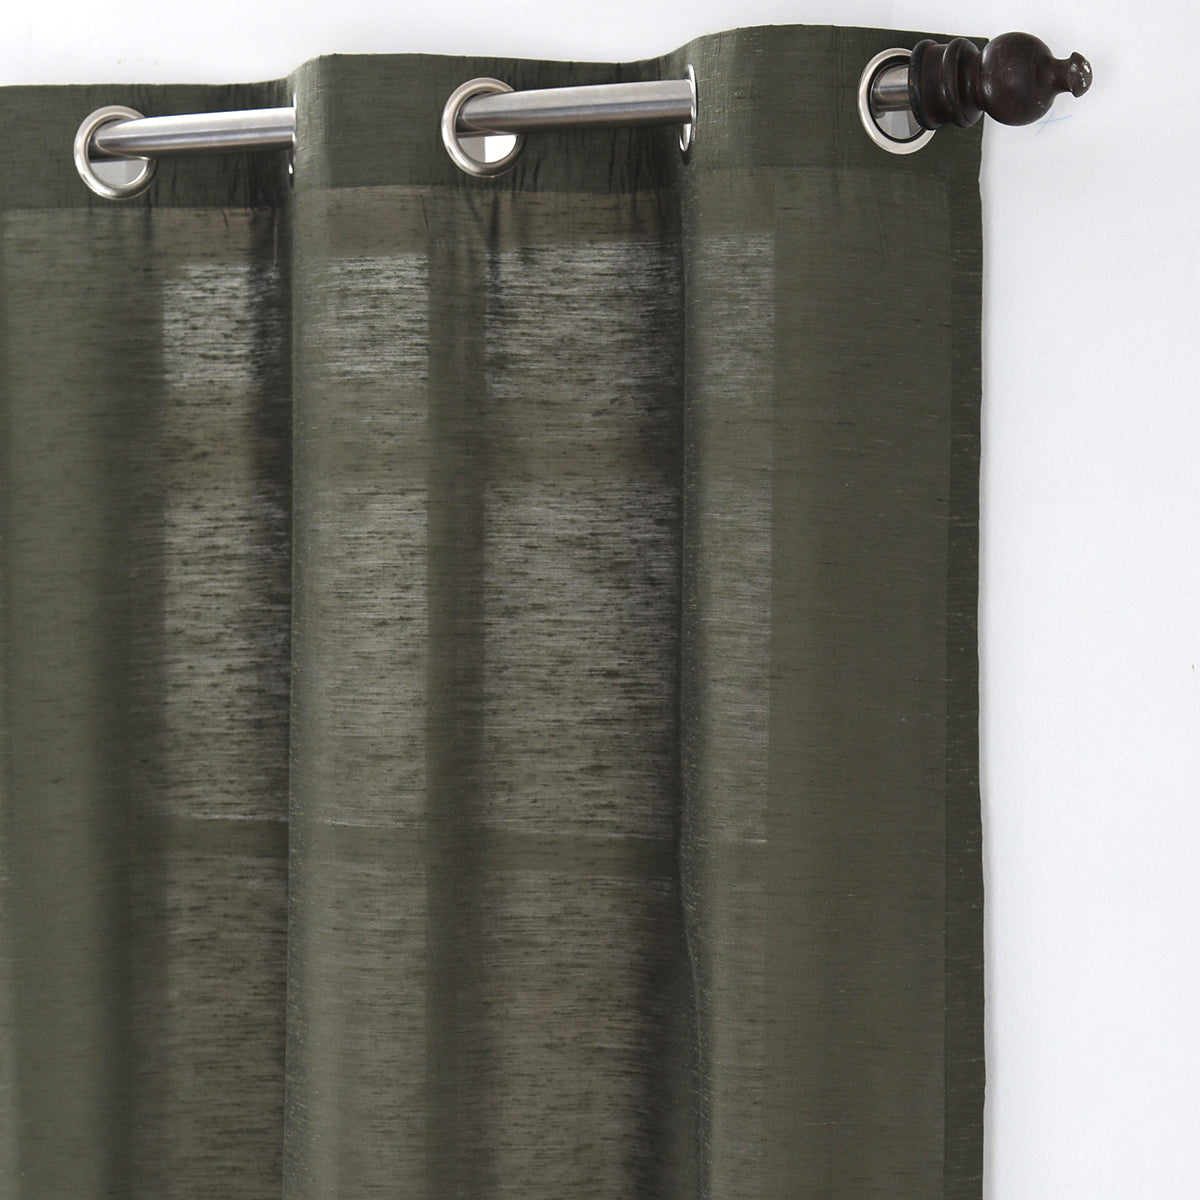 Silky Sillion Solid 2PC Green Curtain Set